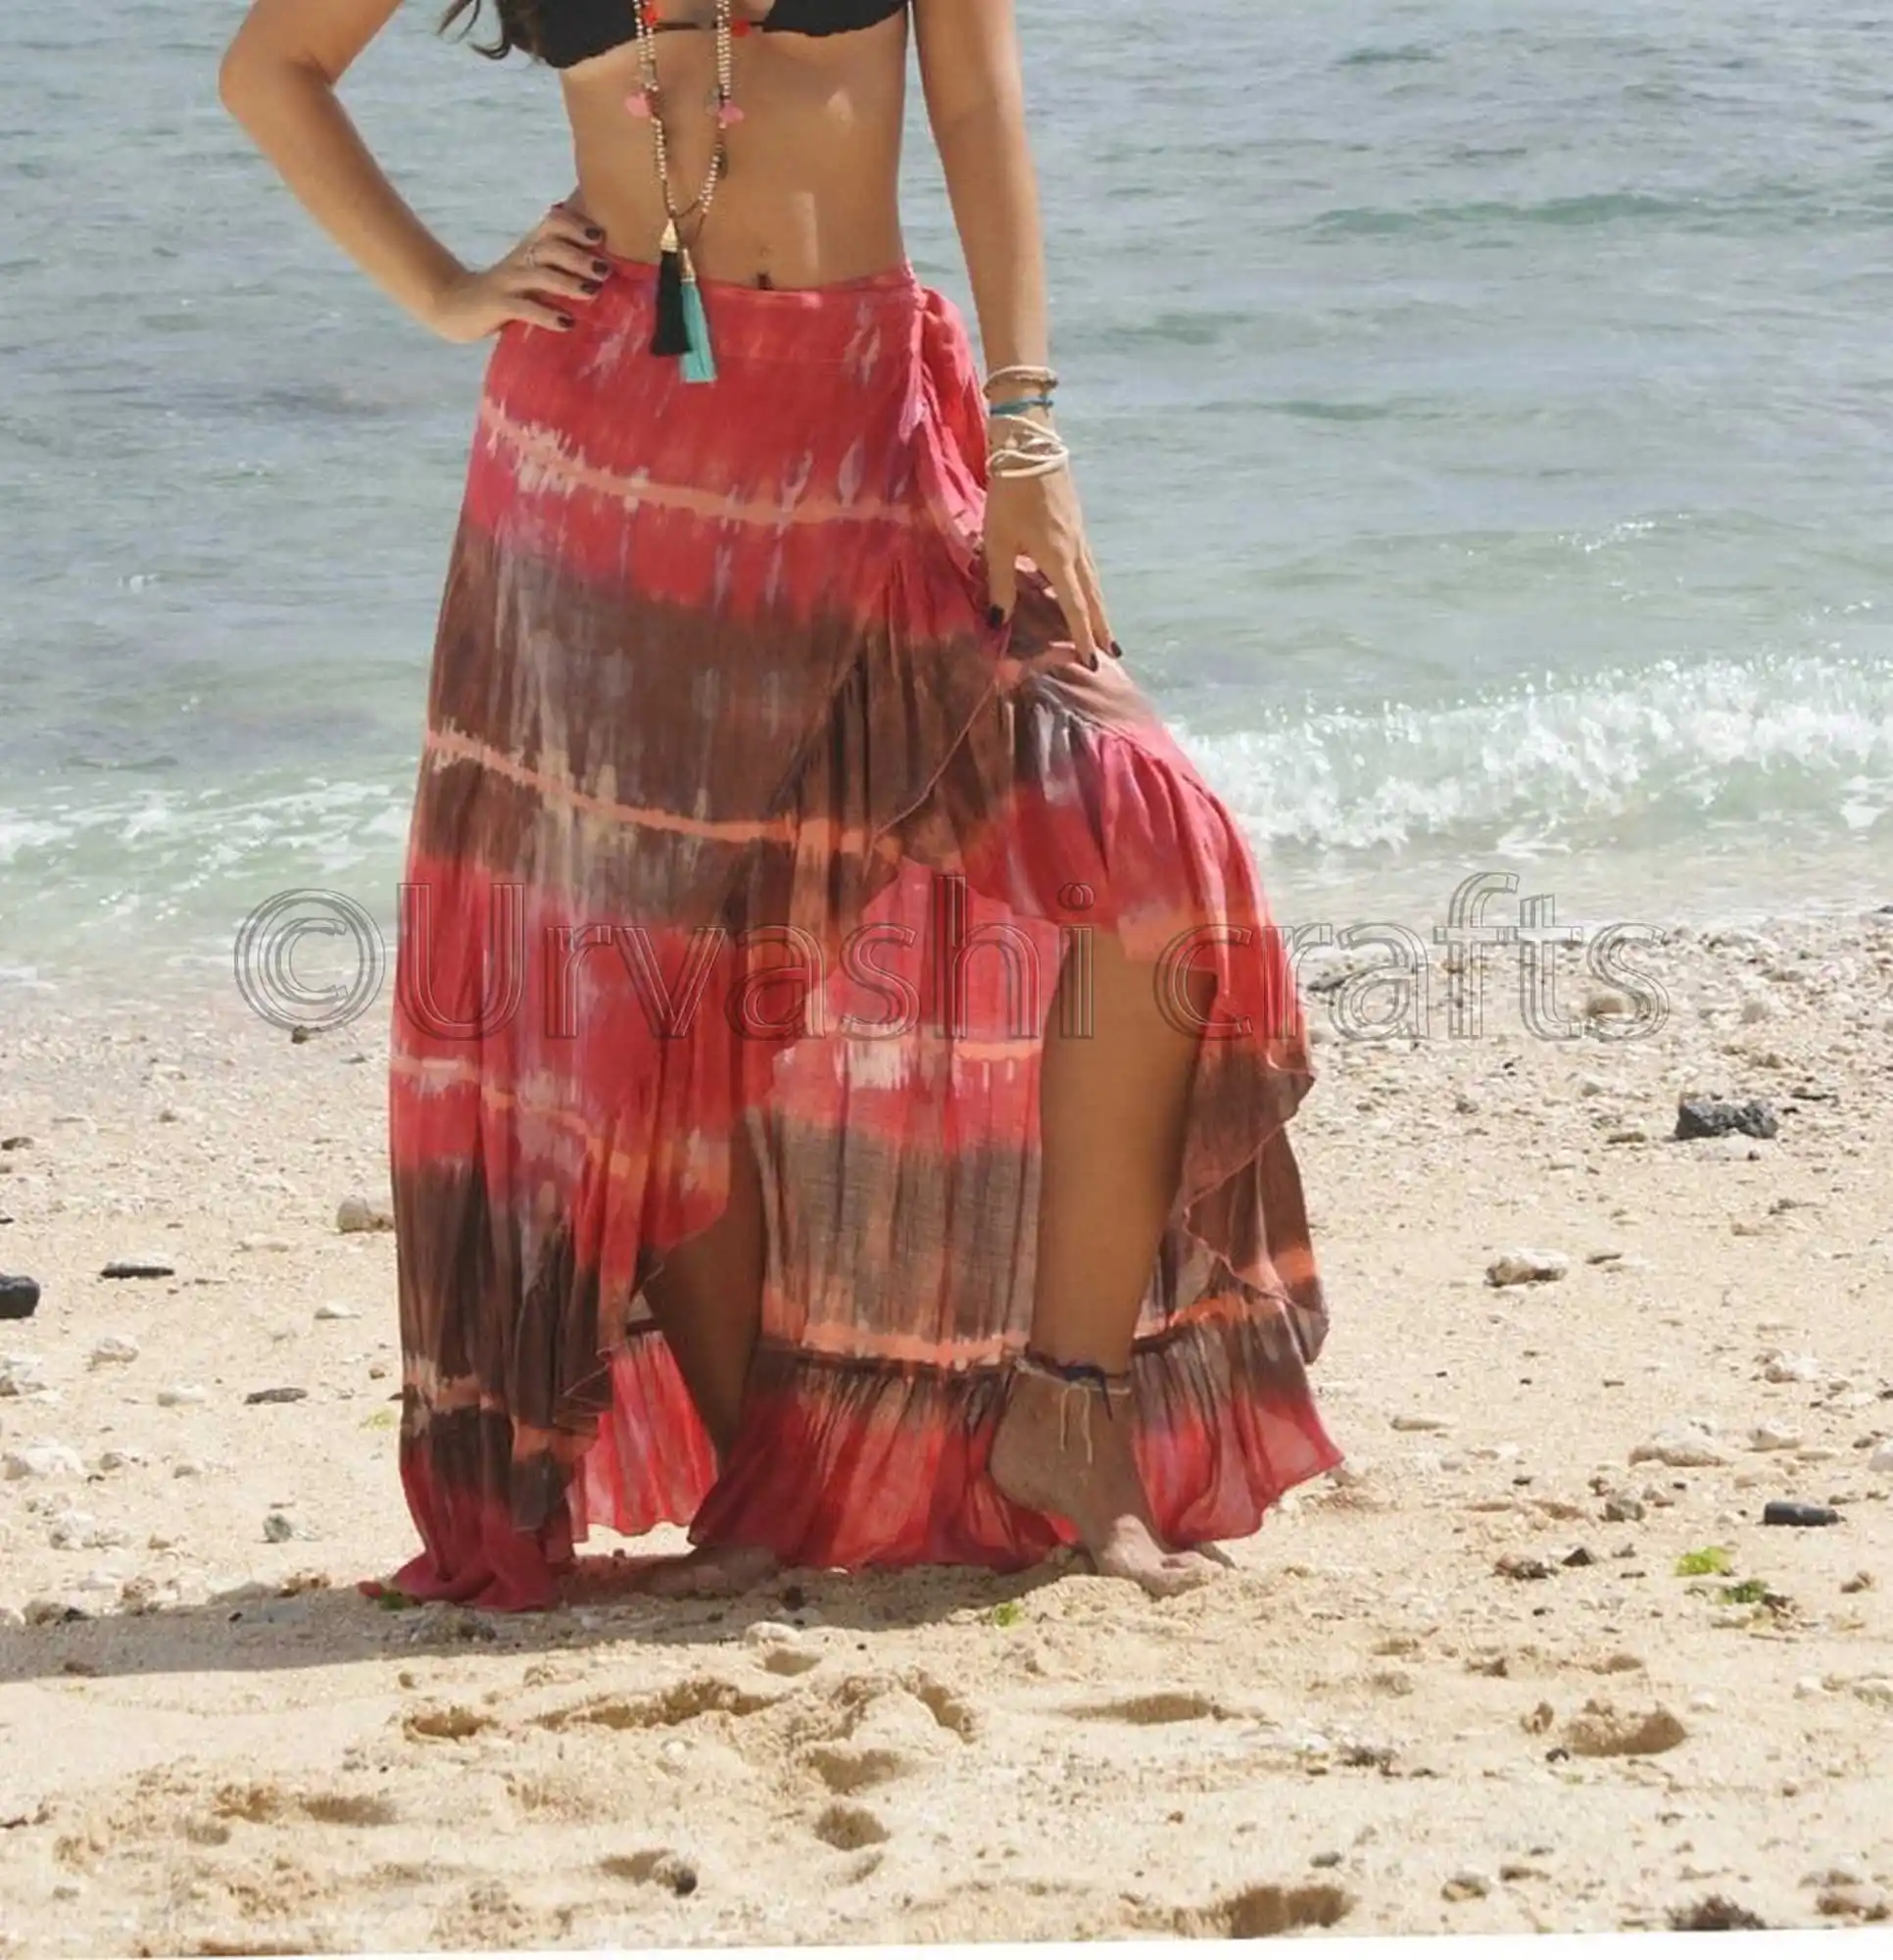 Beli Online dari Produsen Langsung Rok Lilit Wanita Model Boho Beach Tie Dye Bohemian Frill Rok Panjang Kasual